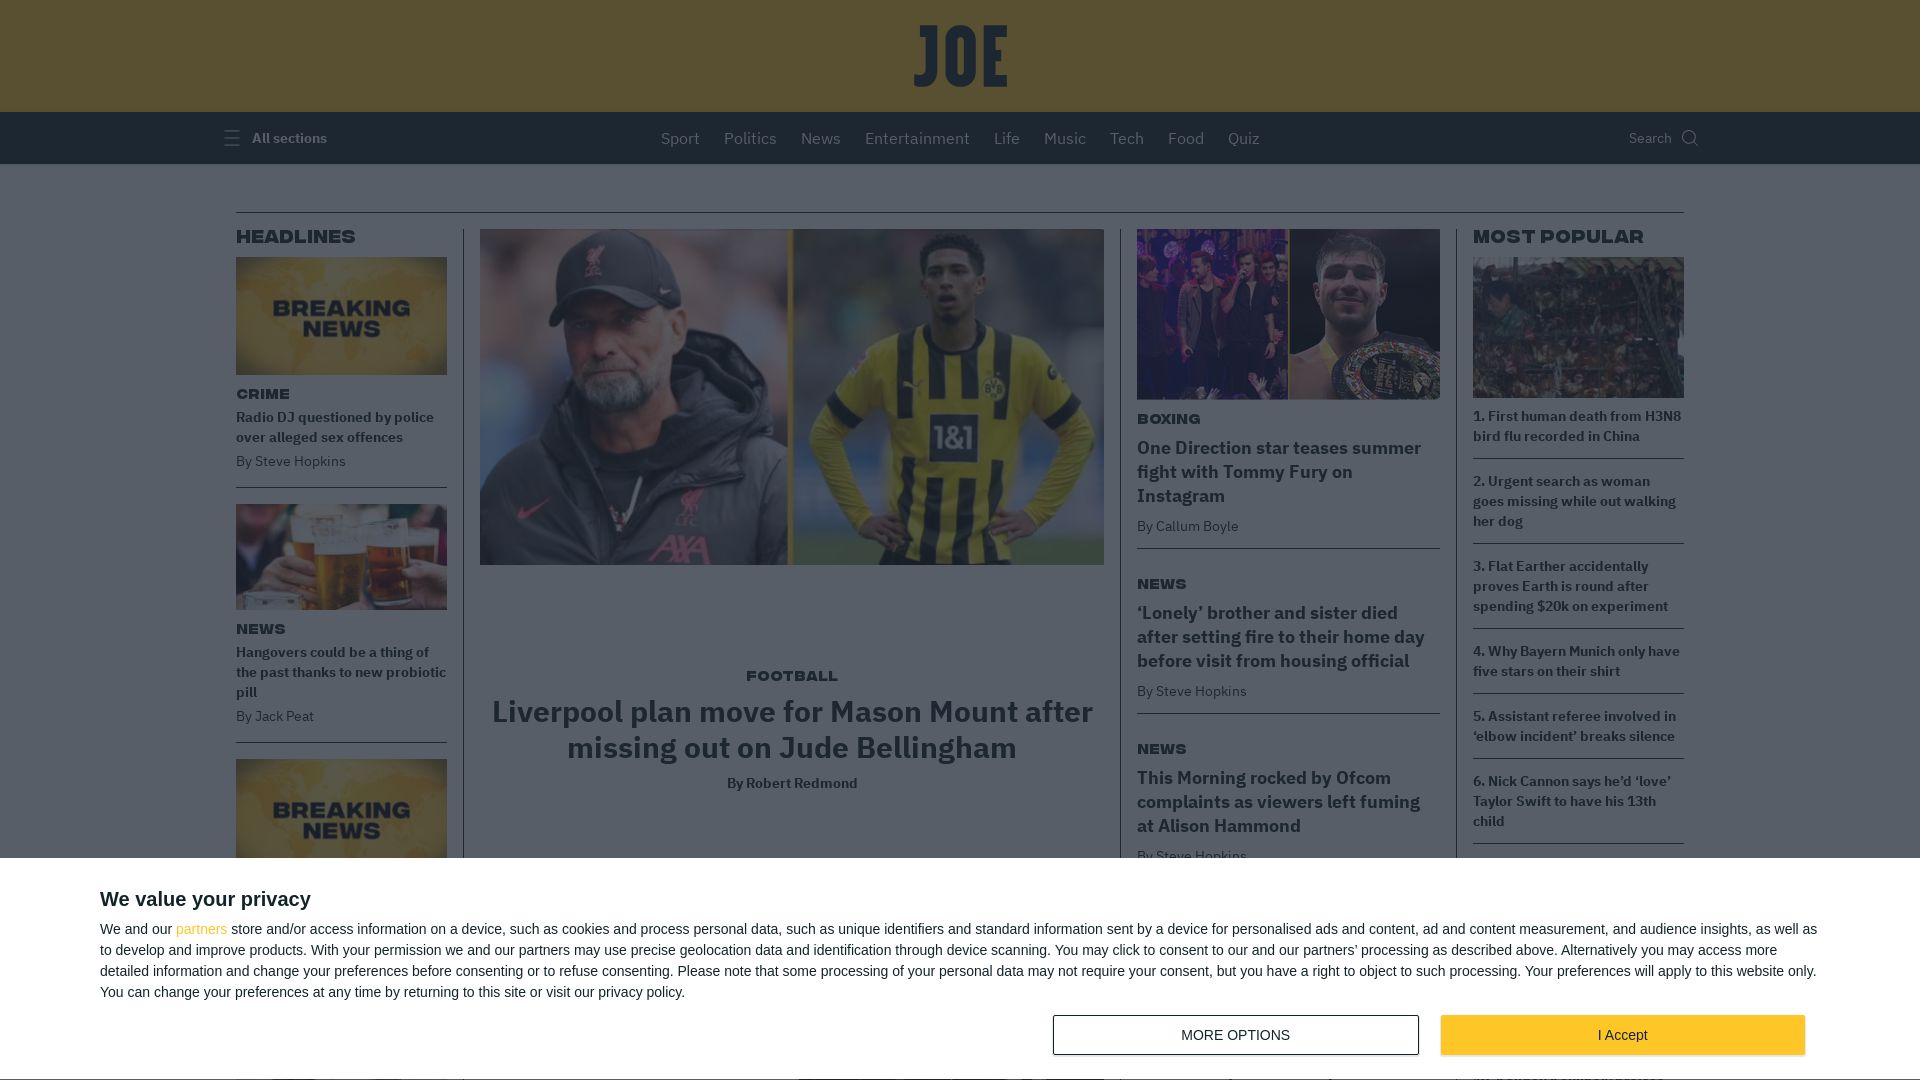 Website status joe.co.uk is   ONLINE